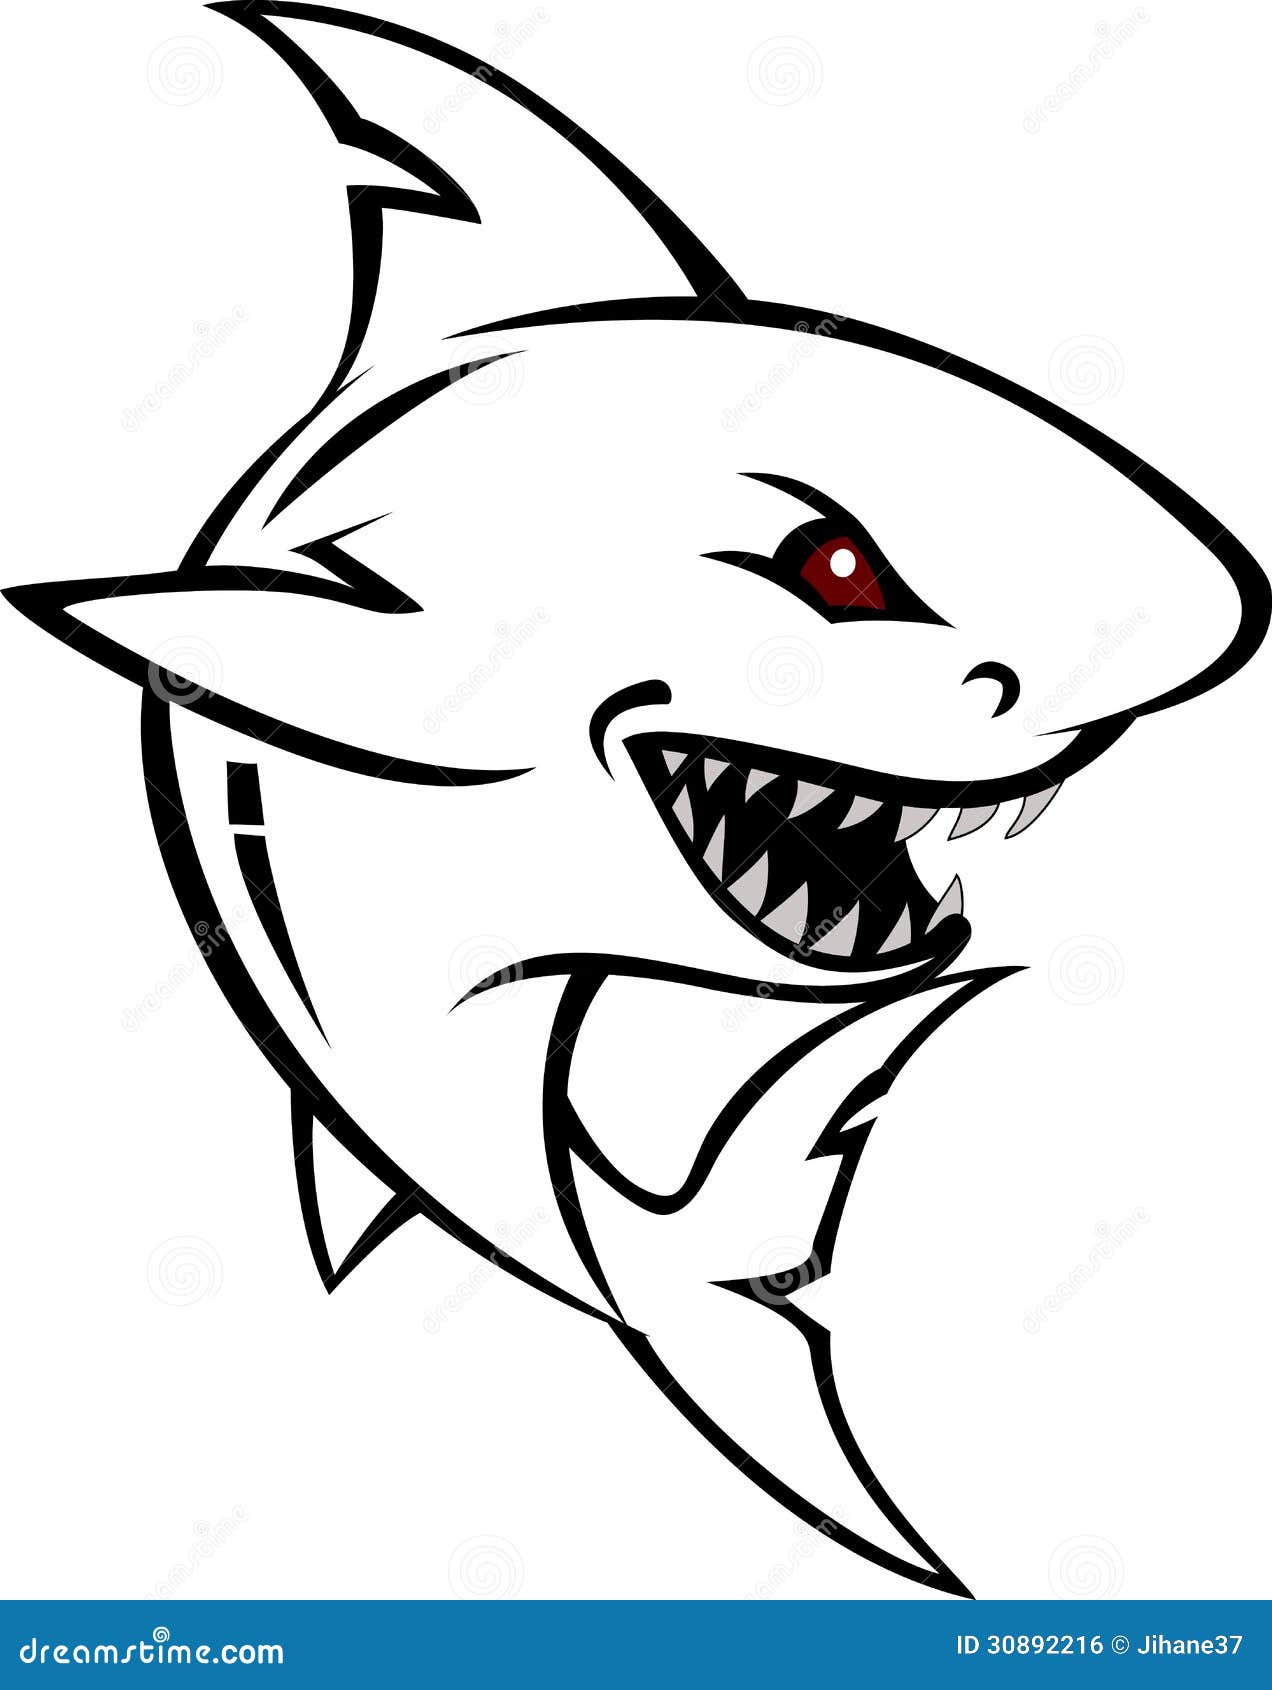 Illustrative Shark Tattoo